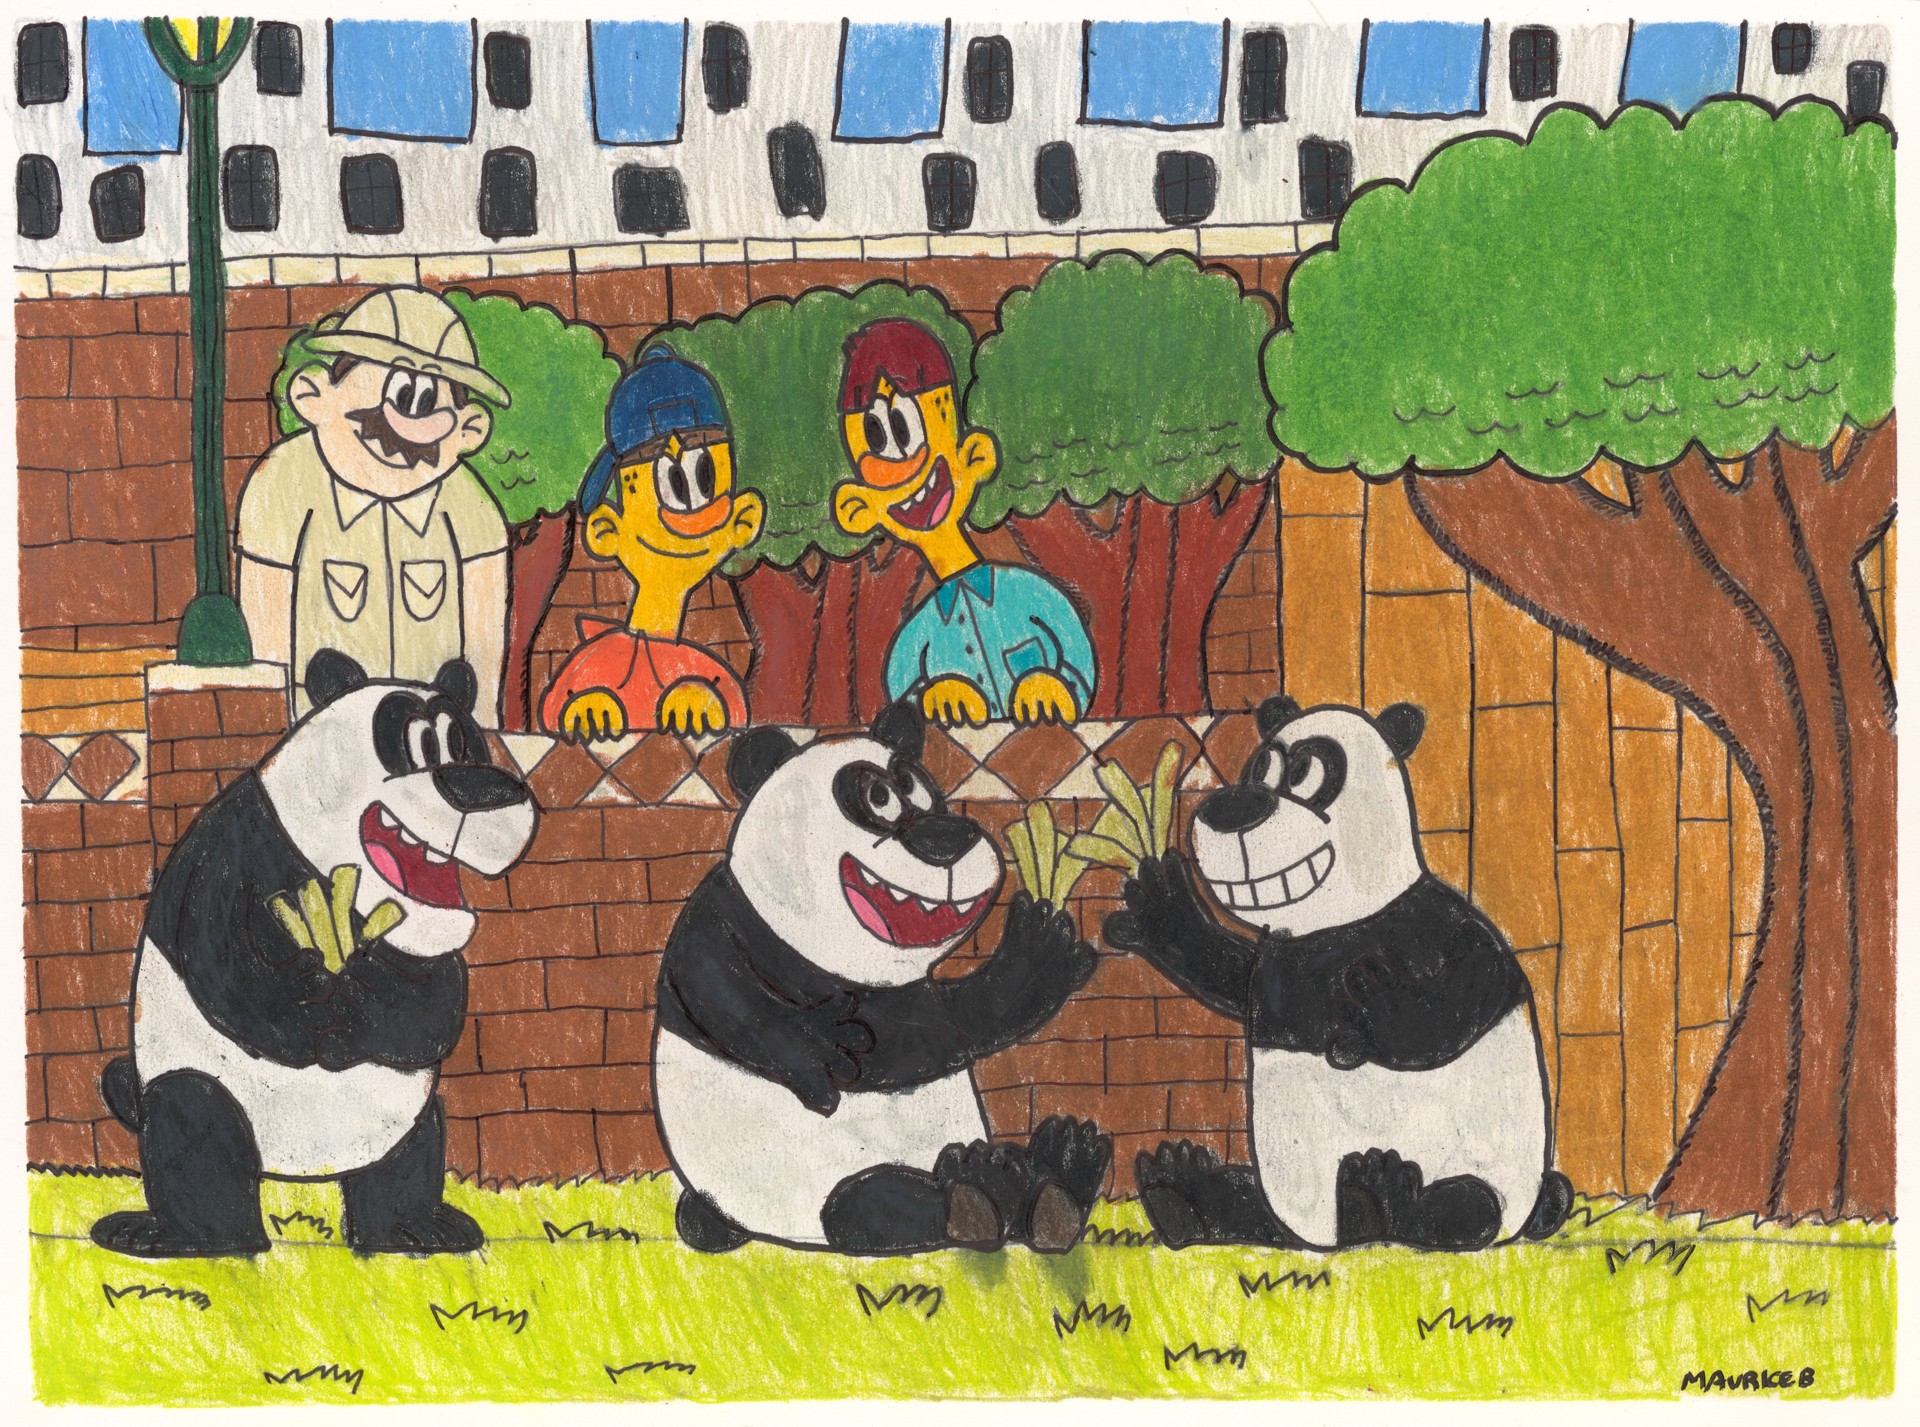 Pandas by Maurice Barnes